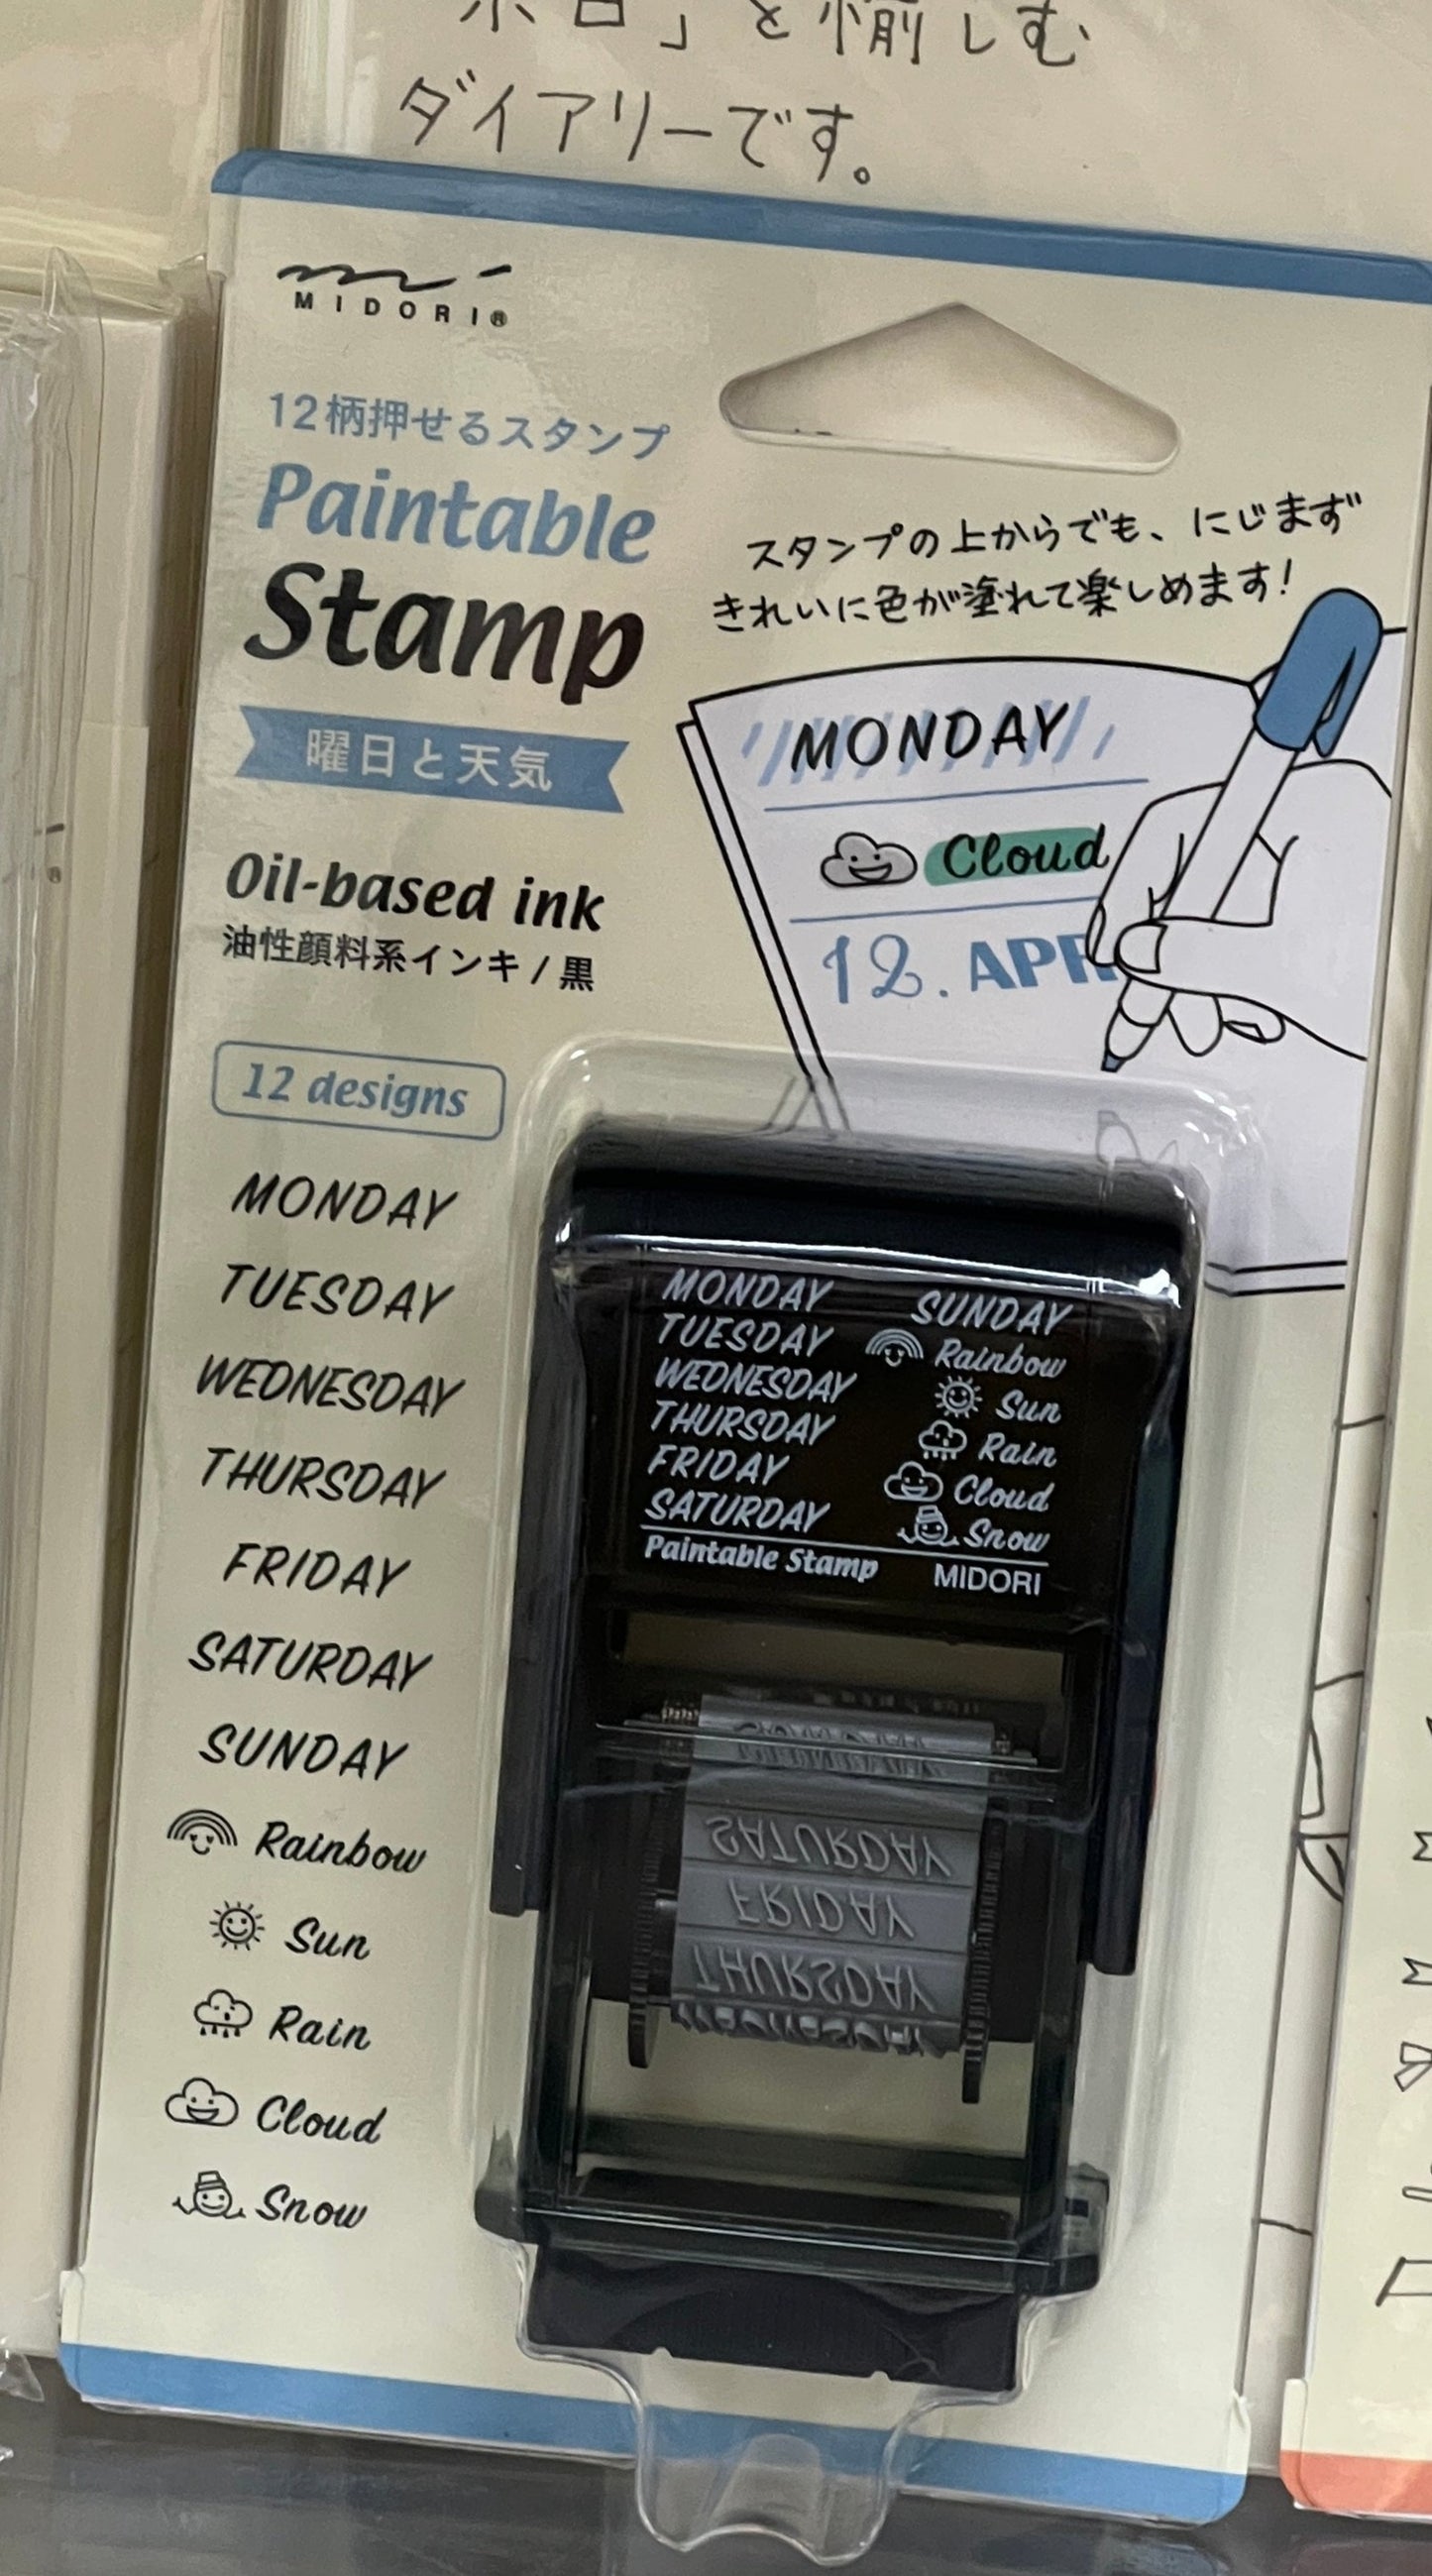 MIDORI Paintable Small Stamp Rotating Date by Midori